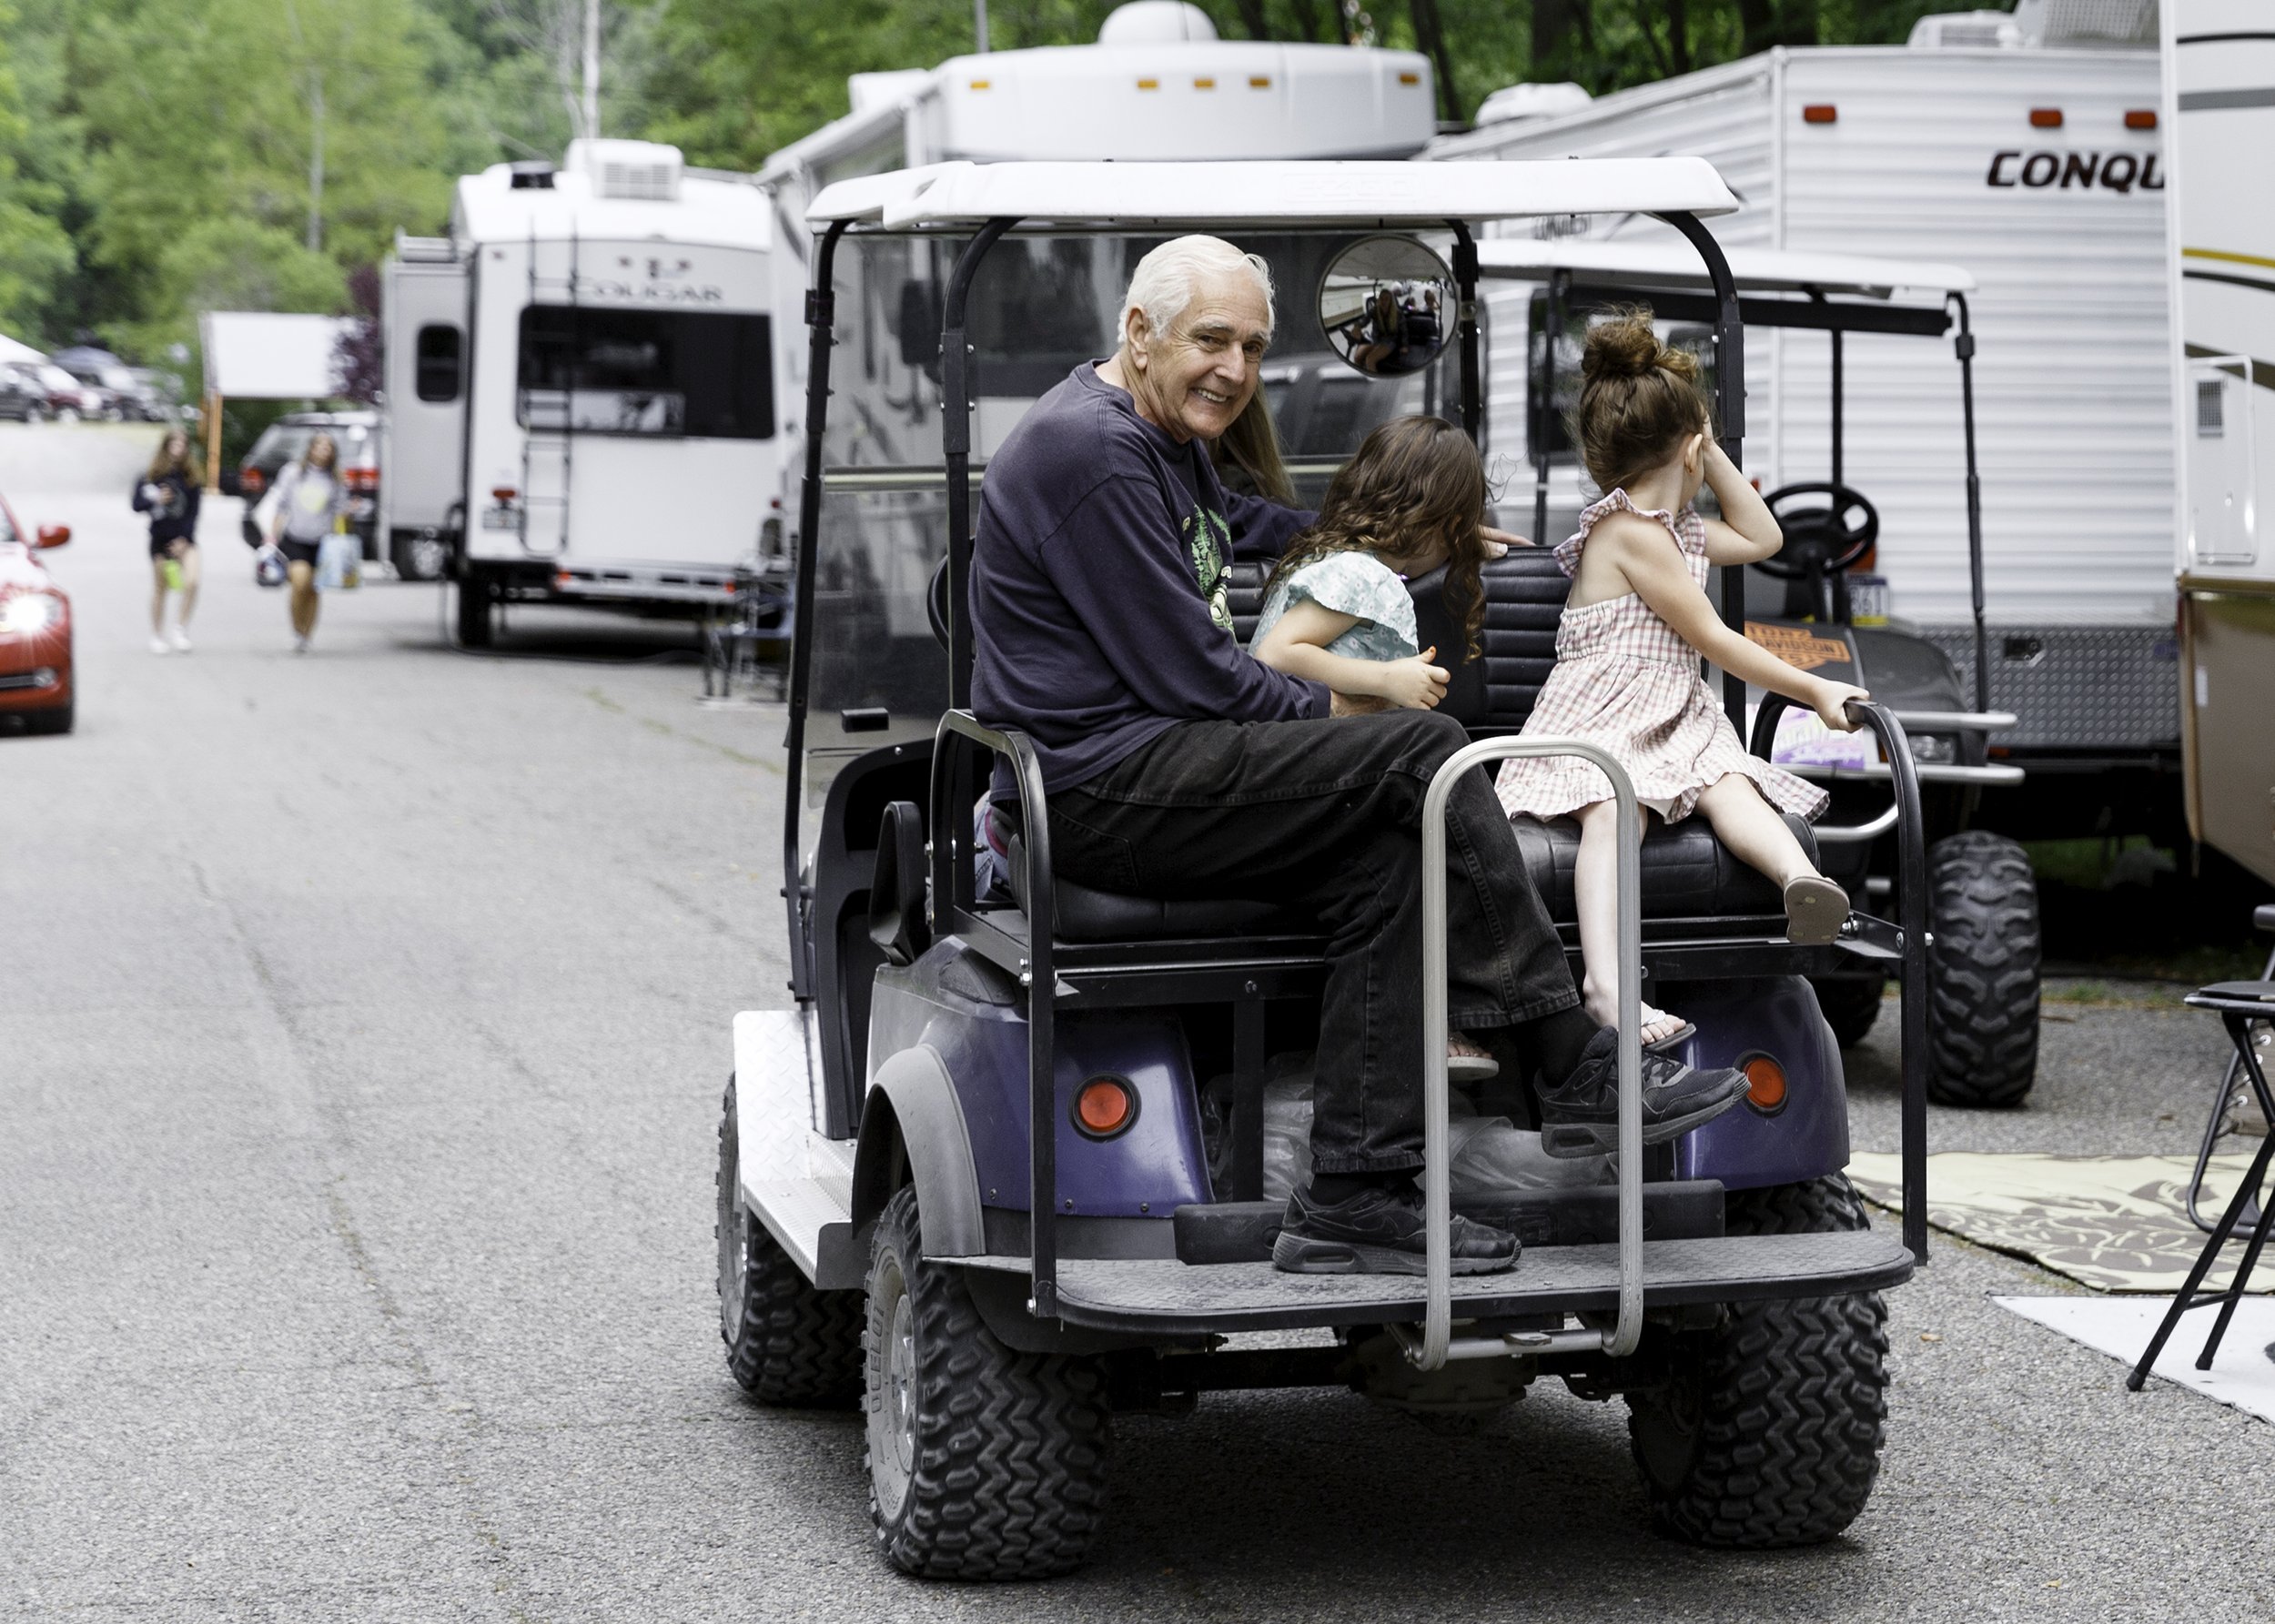 Harry on Golf cart with kids.jpg